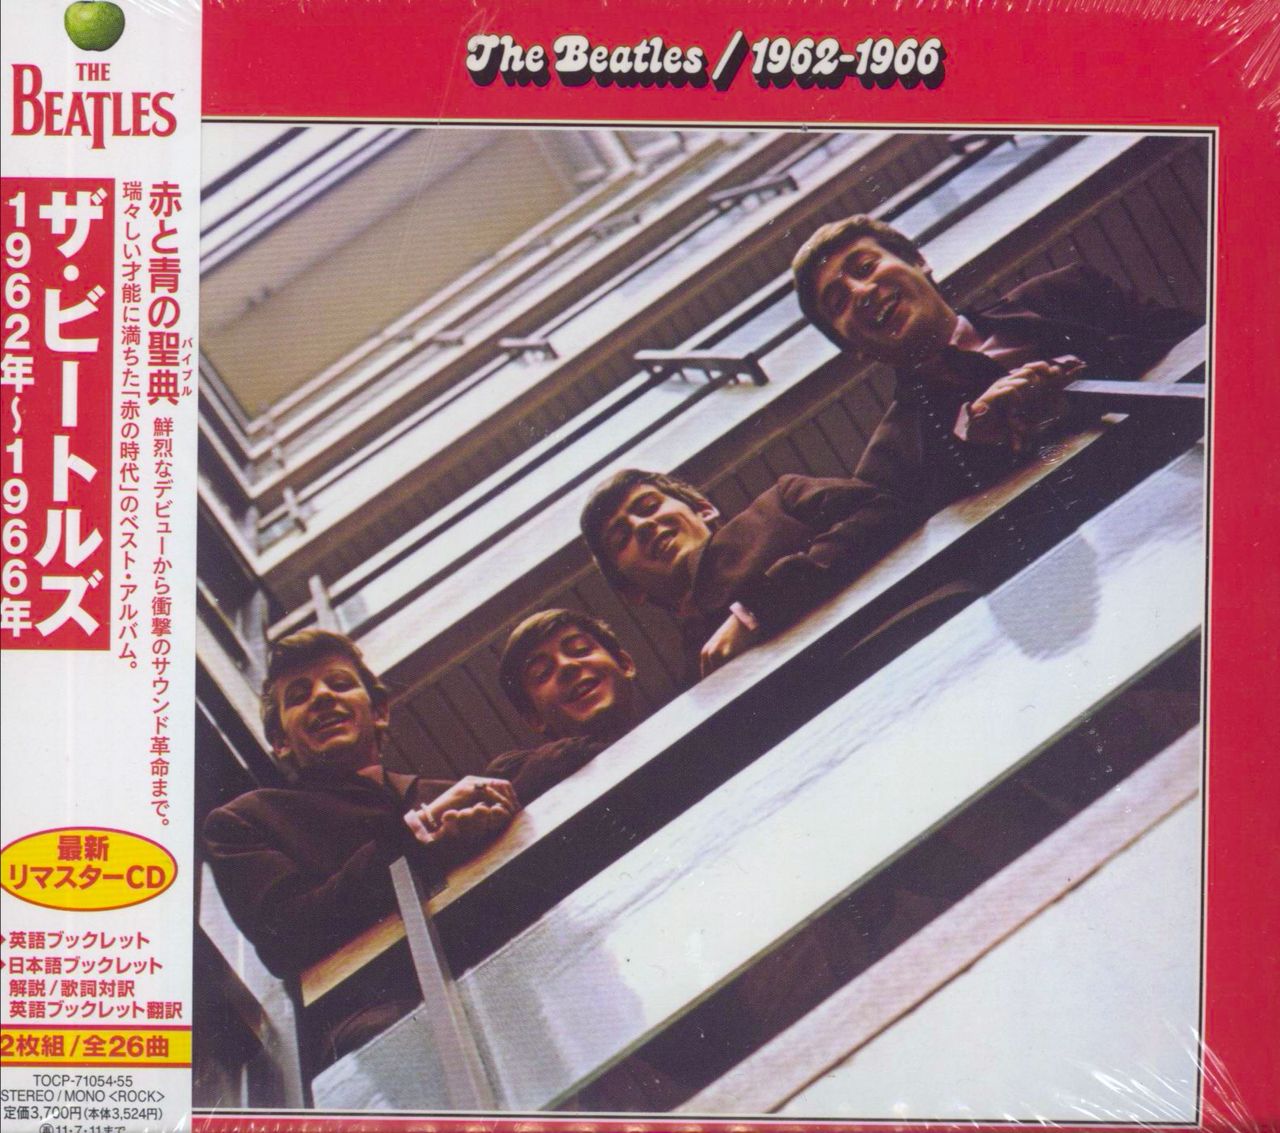 The Beatles 1962-1966 [The Red Album] Japanese 2-CD album